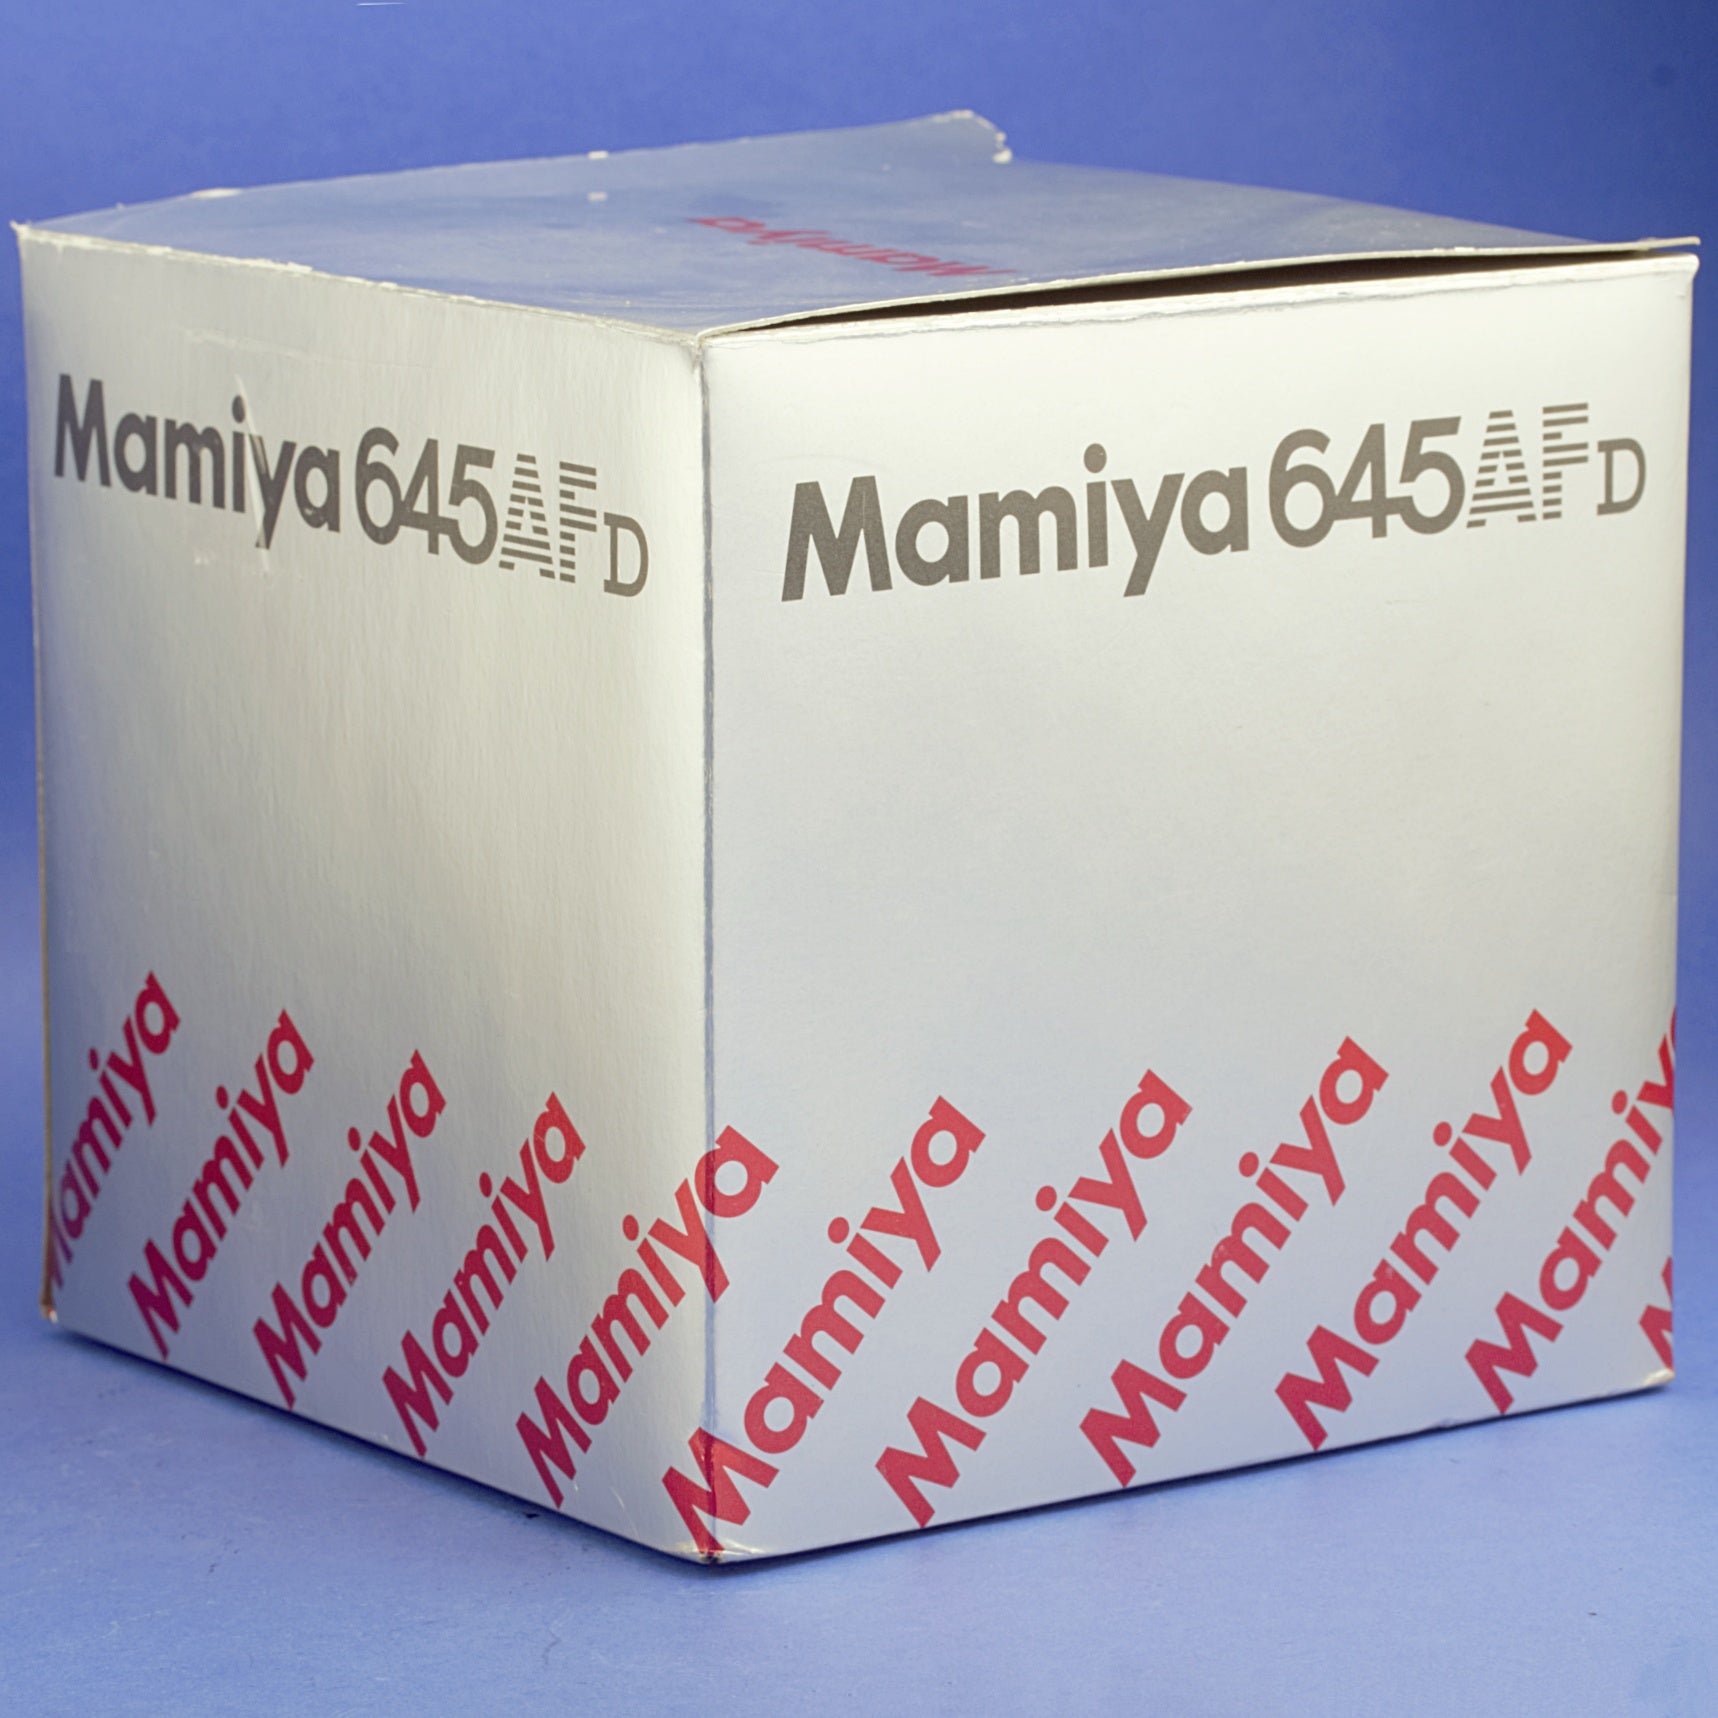 Mamiya 645 AFD Medium Format Camera Kit Beautiful Condition